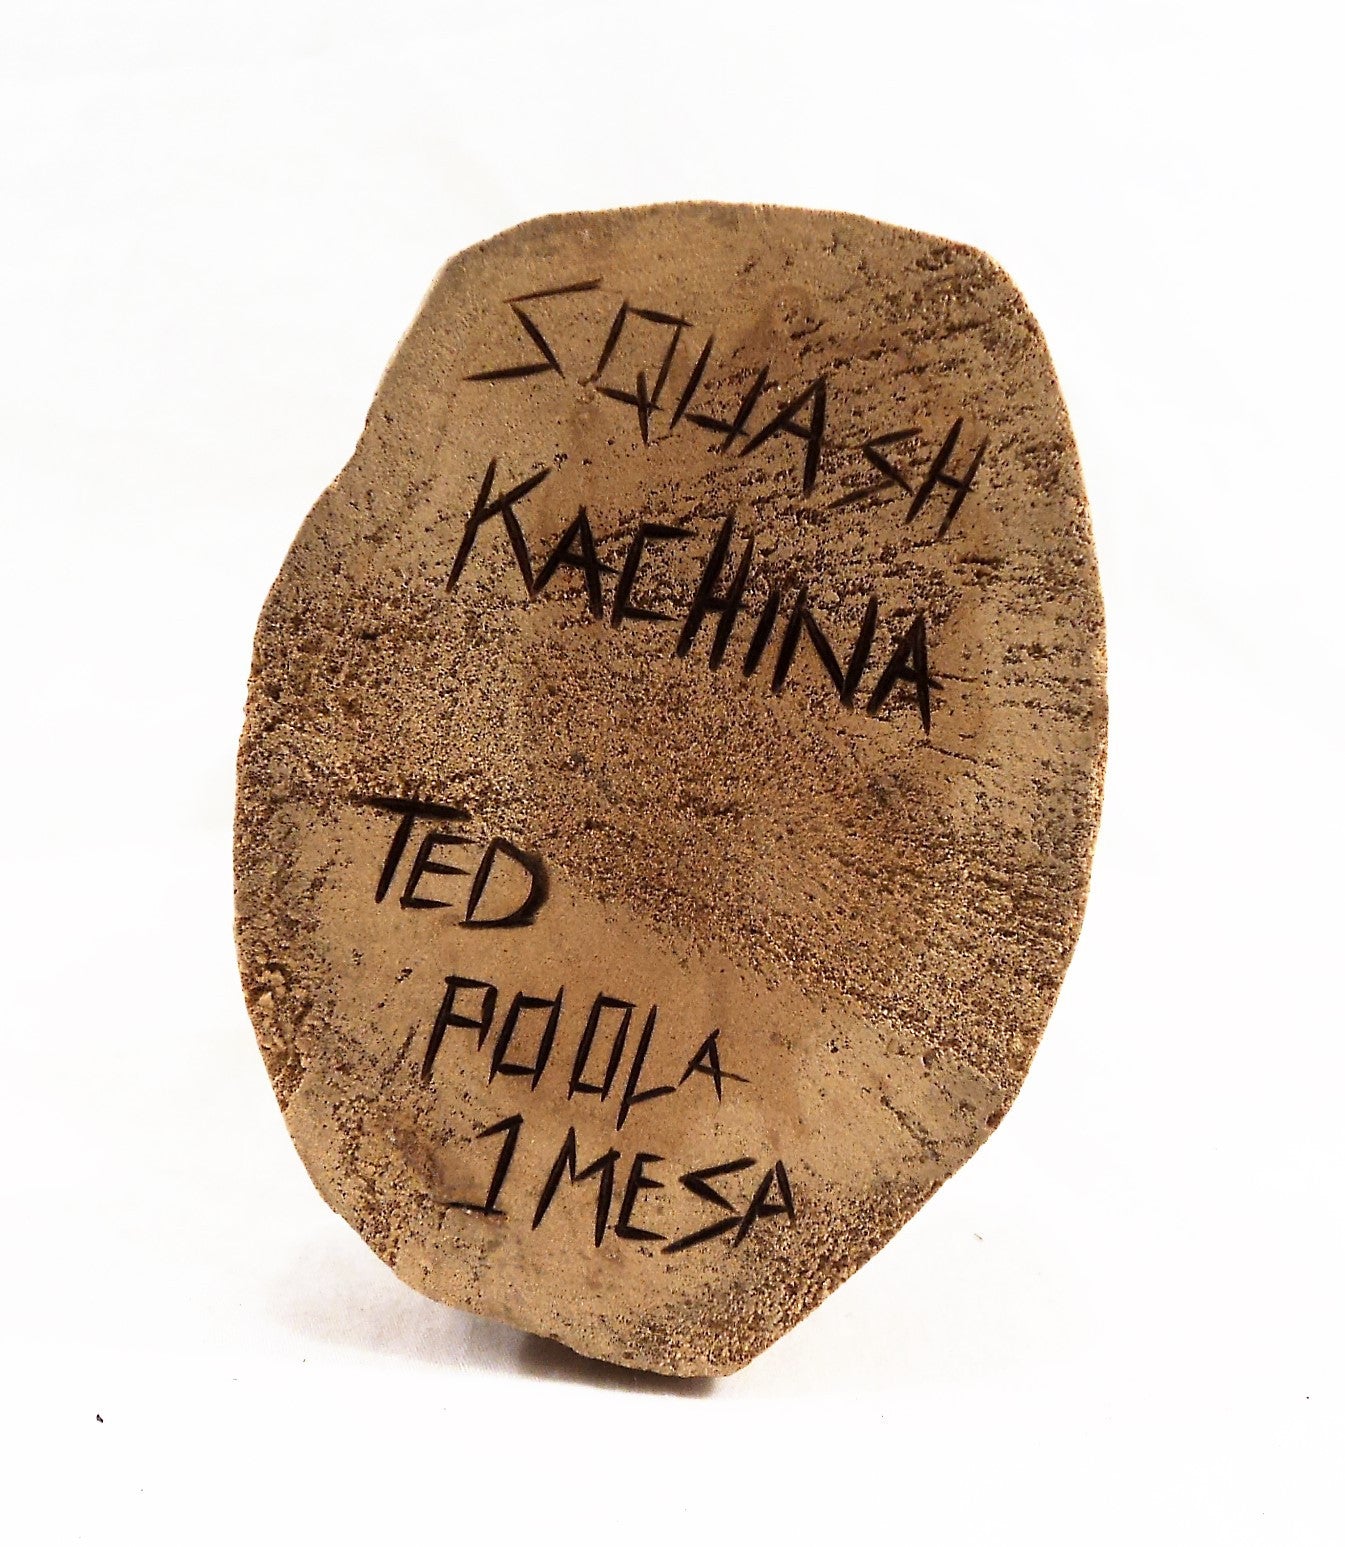 Hopi Squash Kachina by Ted Poola